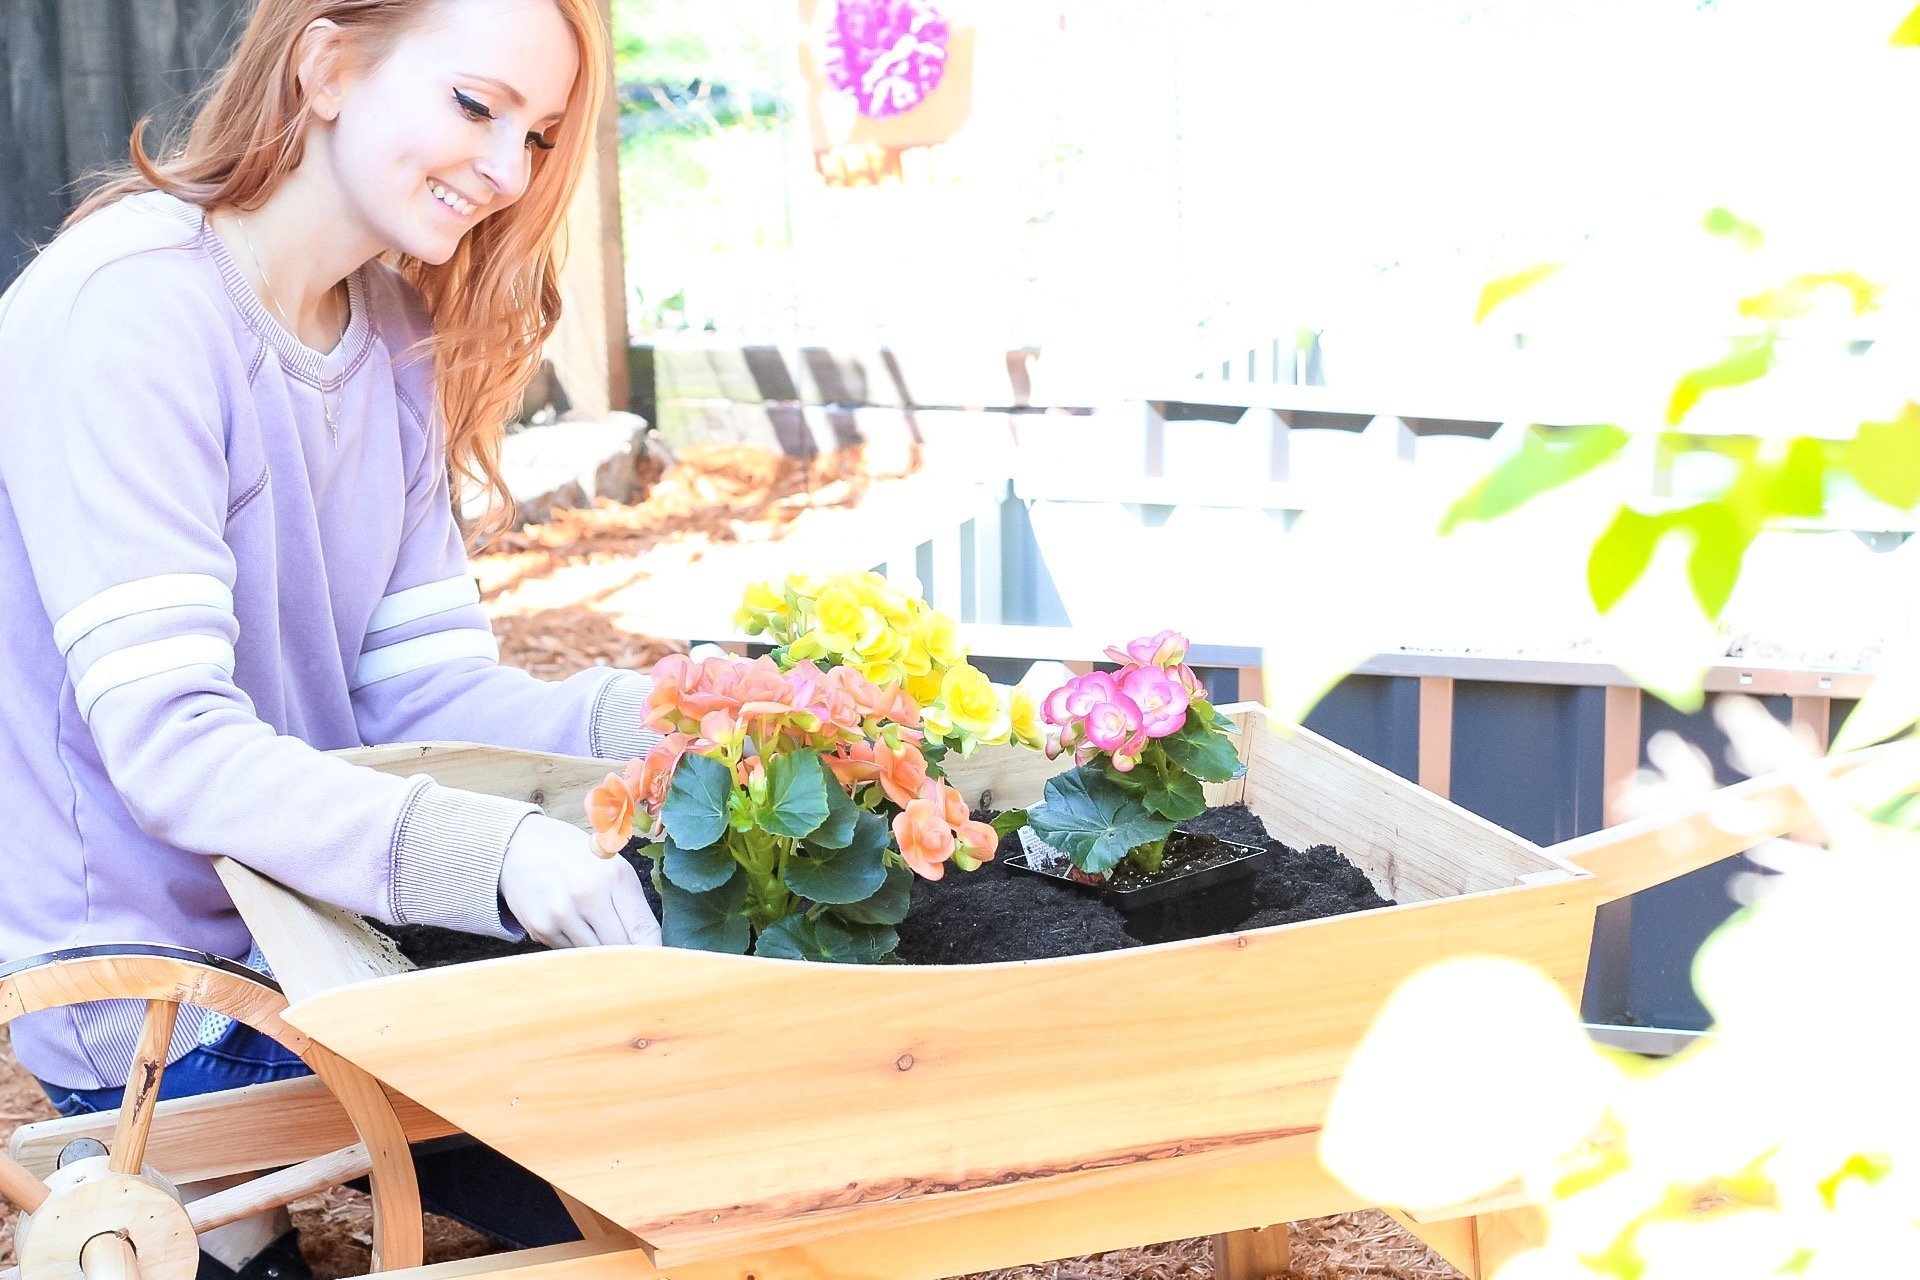 gardening tips - filling up the wheelbarrow